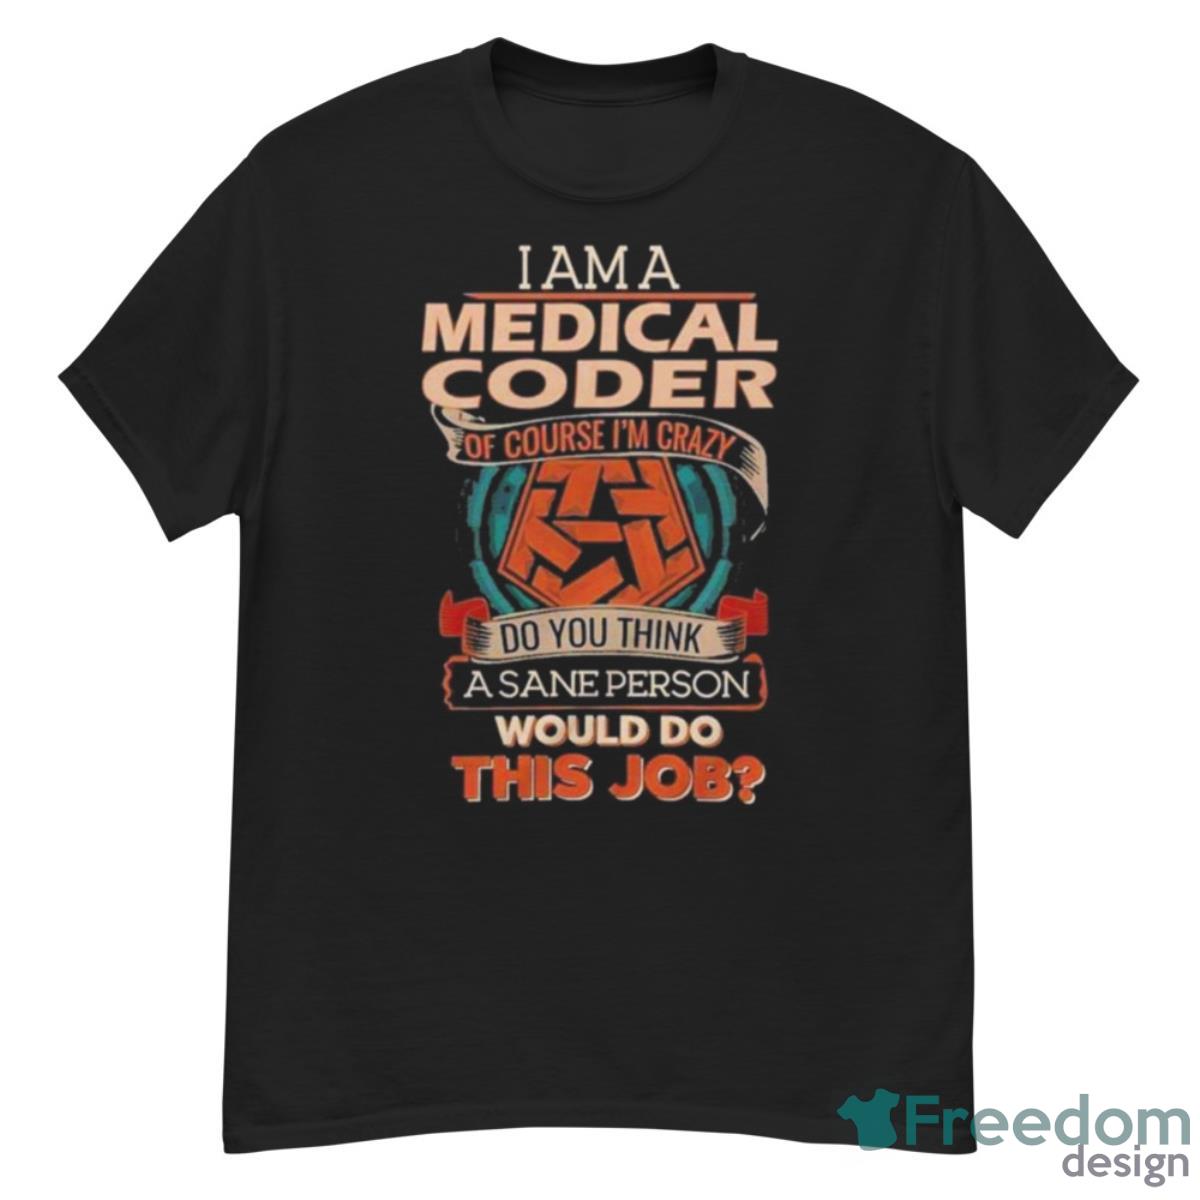 I Am A Medical Coder Of Course I’m Crazy Do You Think A Sane Person Would Do This Job Shirt - G500 Men’s Classic T-Shirt